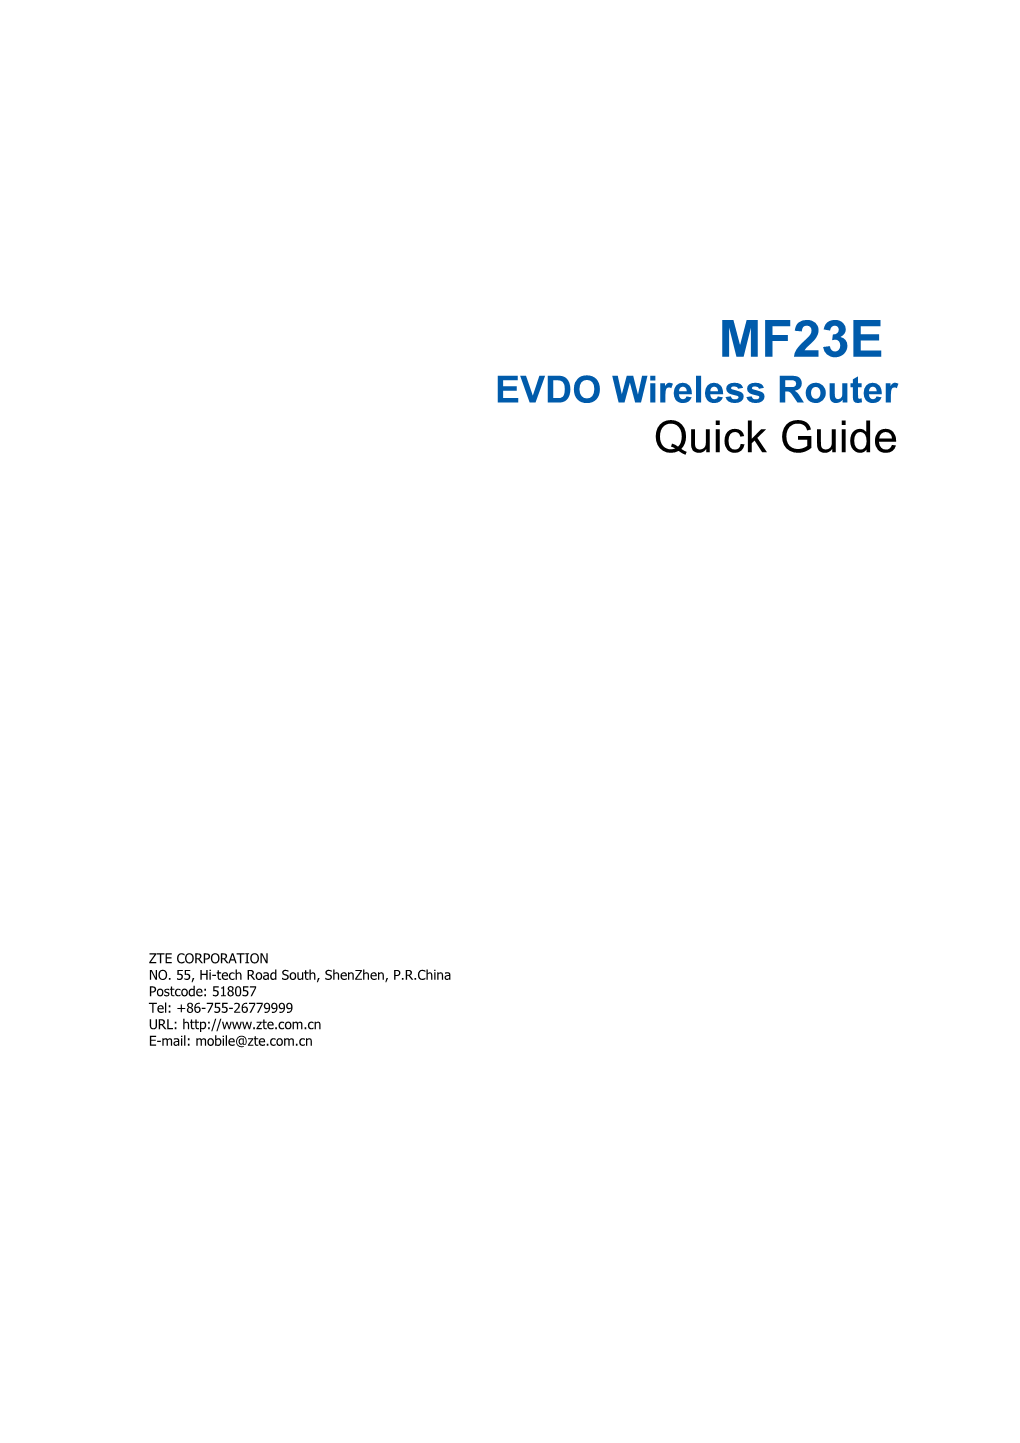 EVDO Wireless Router